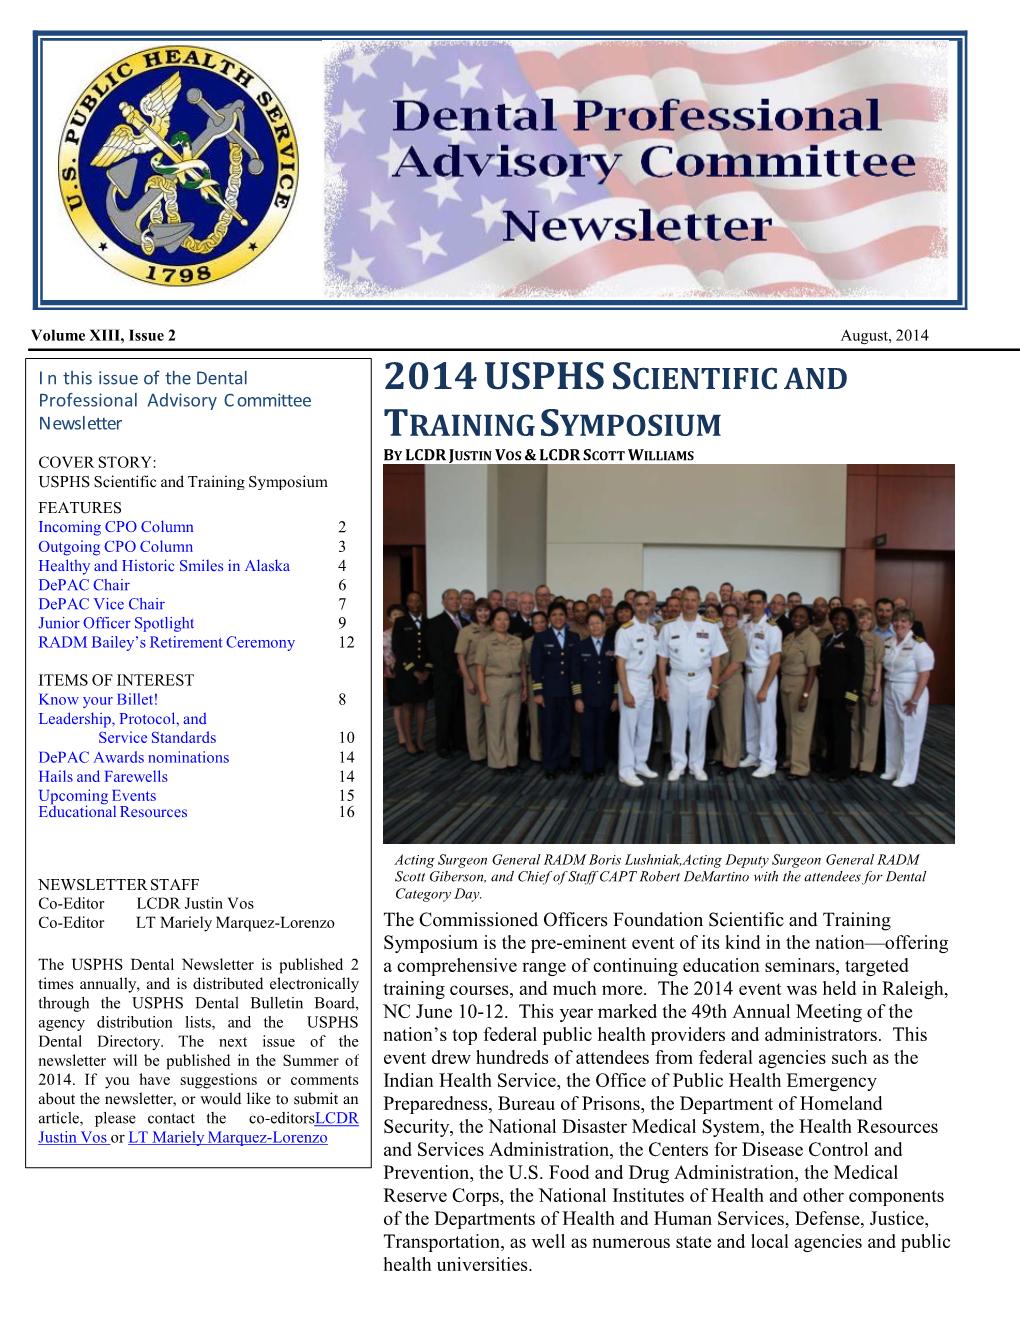 Dental Professional Advisory Committee Newsletter August, 2014